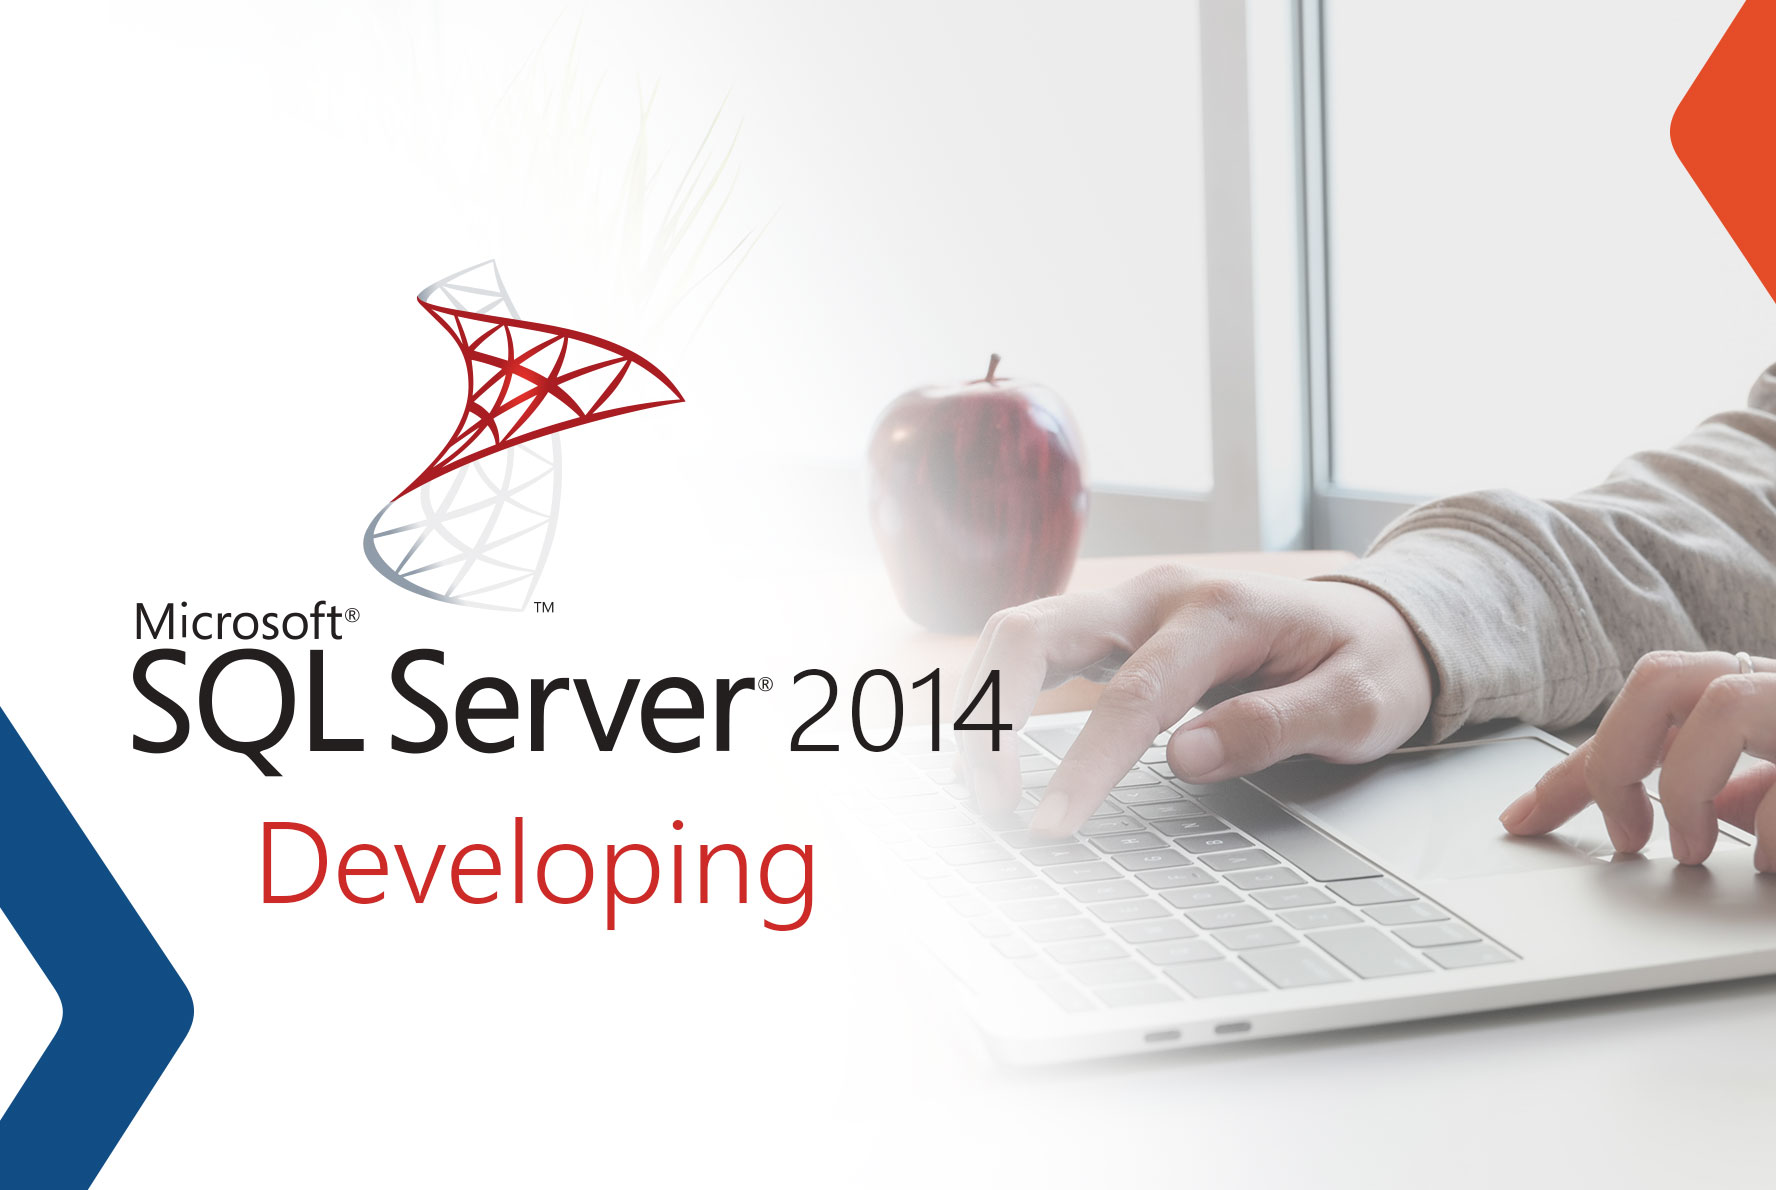 Desarrollo de bases de datos de Microsoft SQL Server 2014